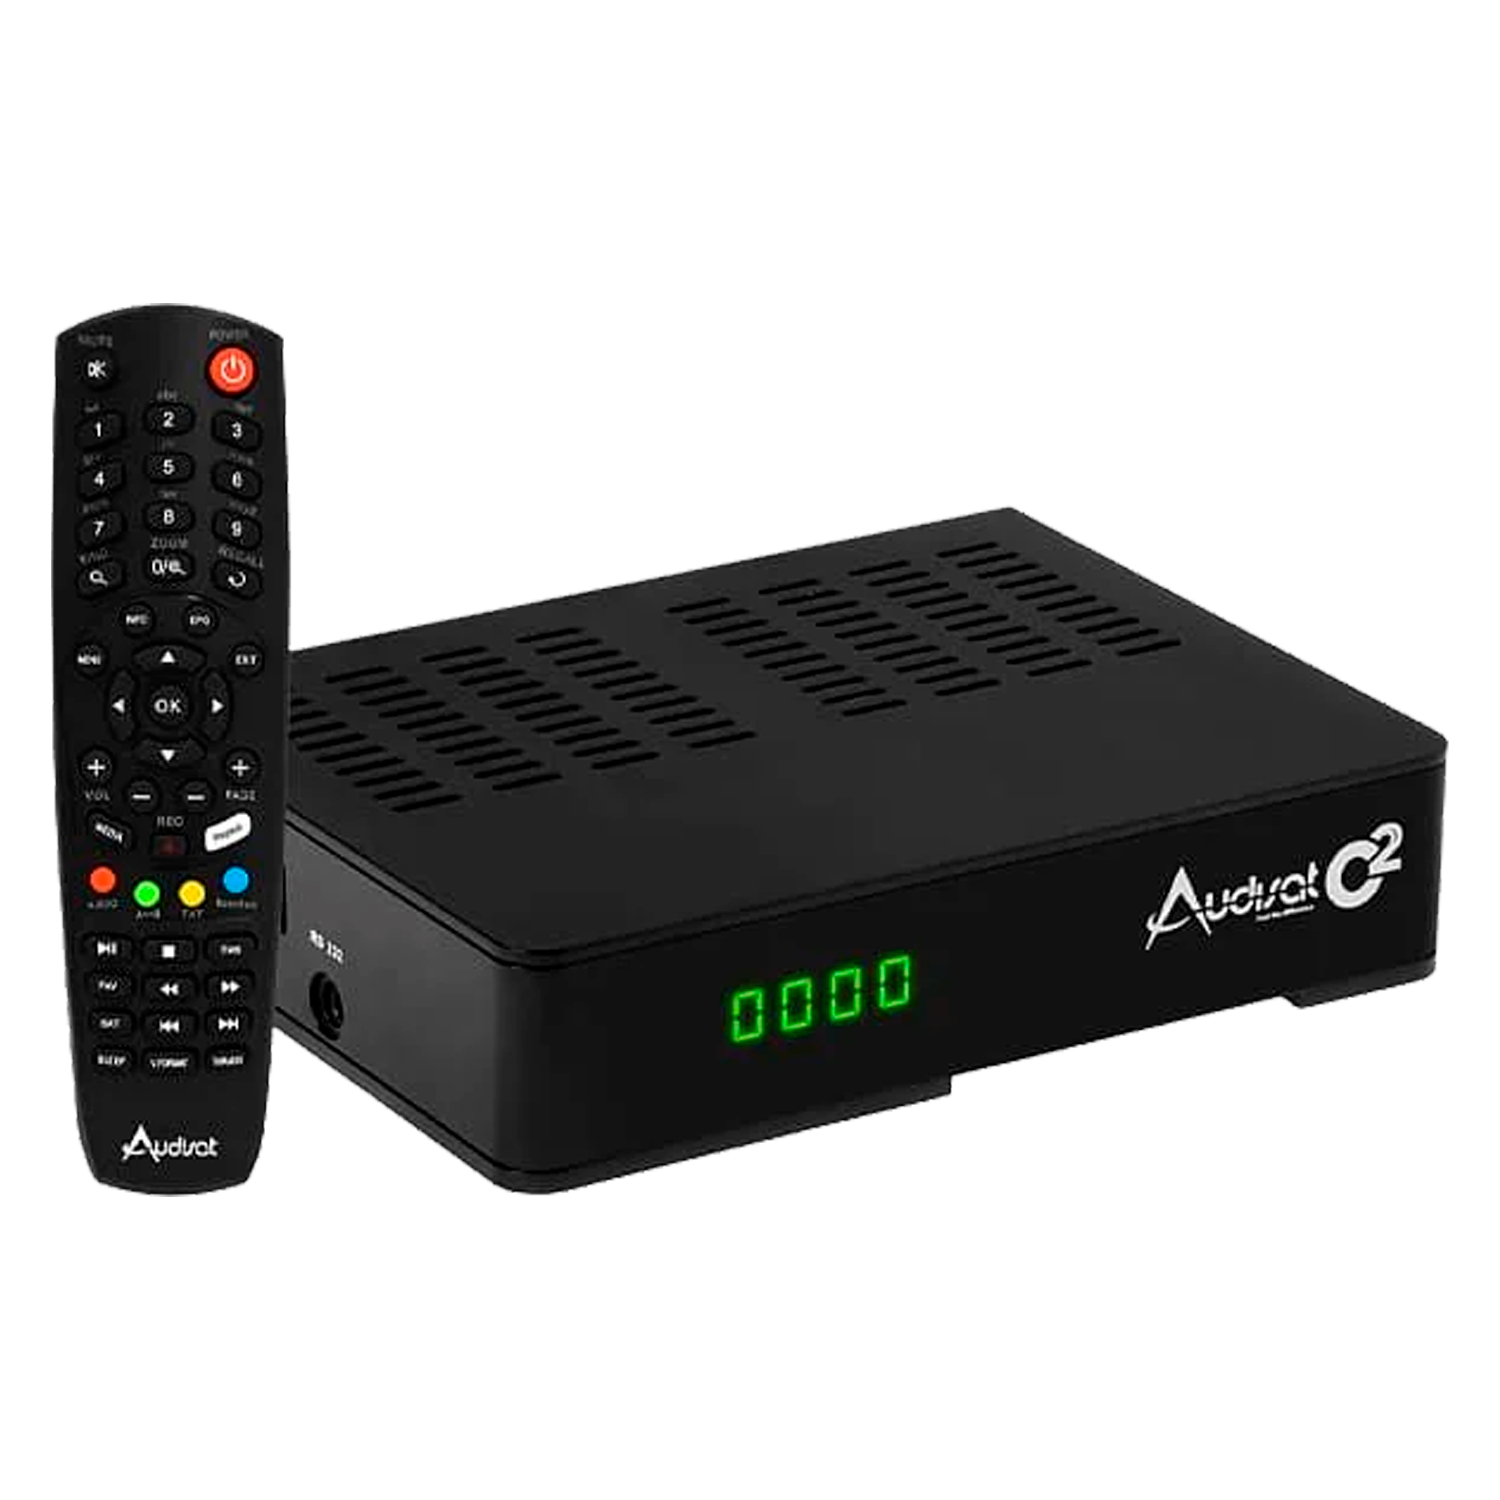 Receptor Audisat C2 Full HD Wi-Fi - Preto